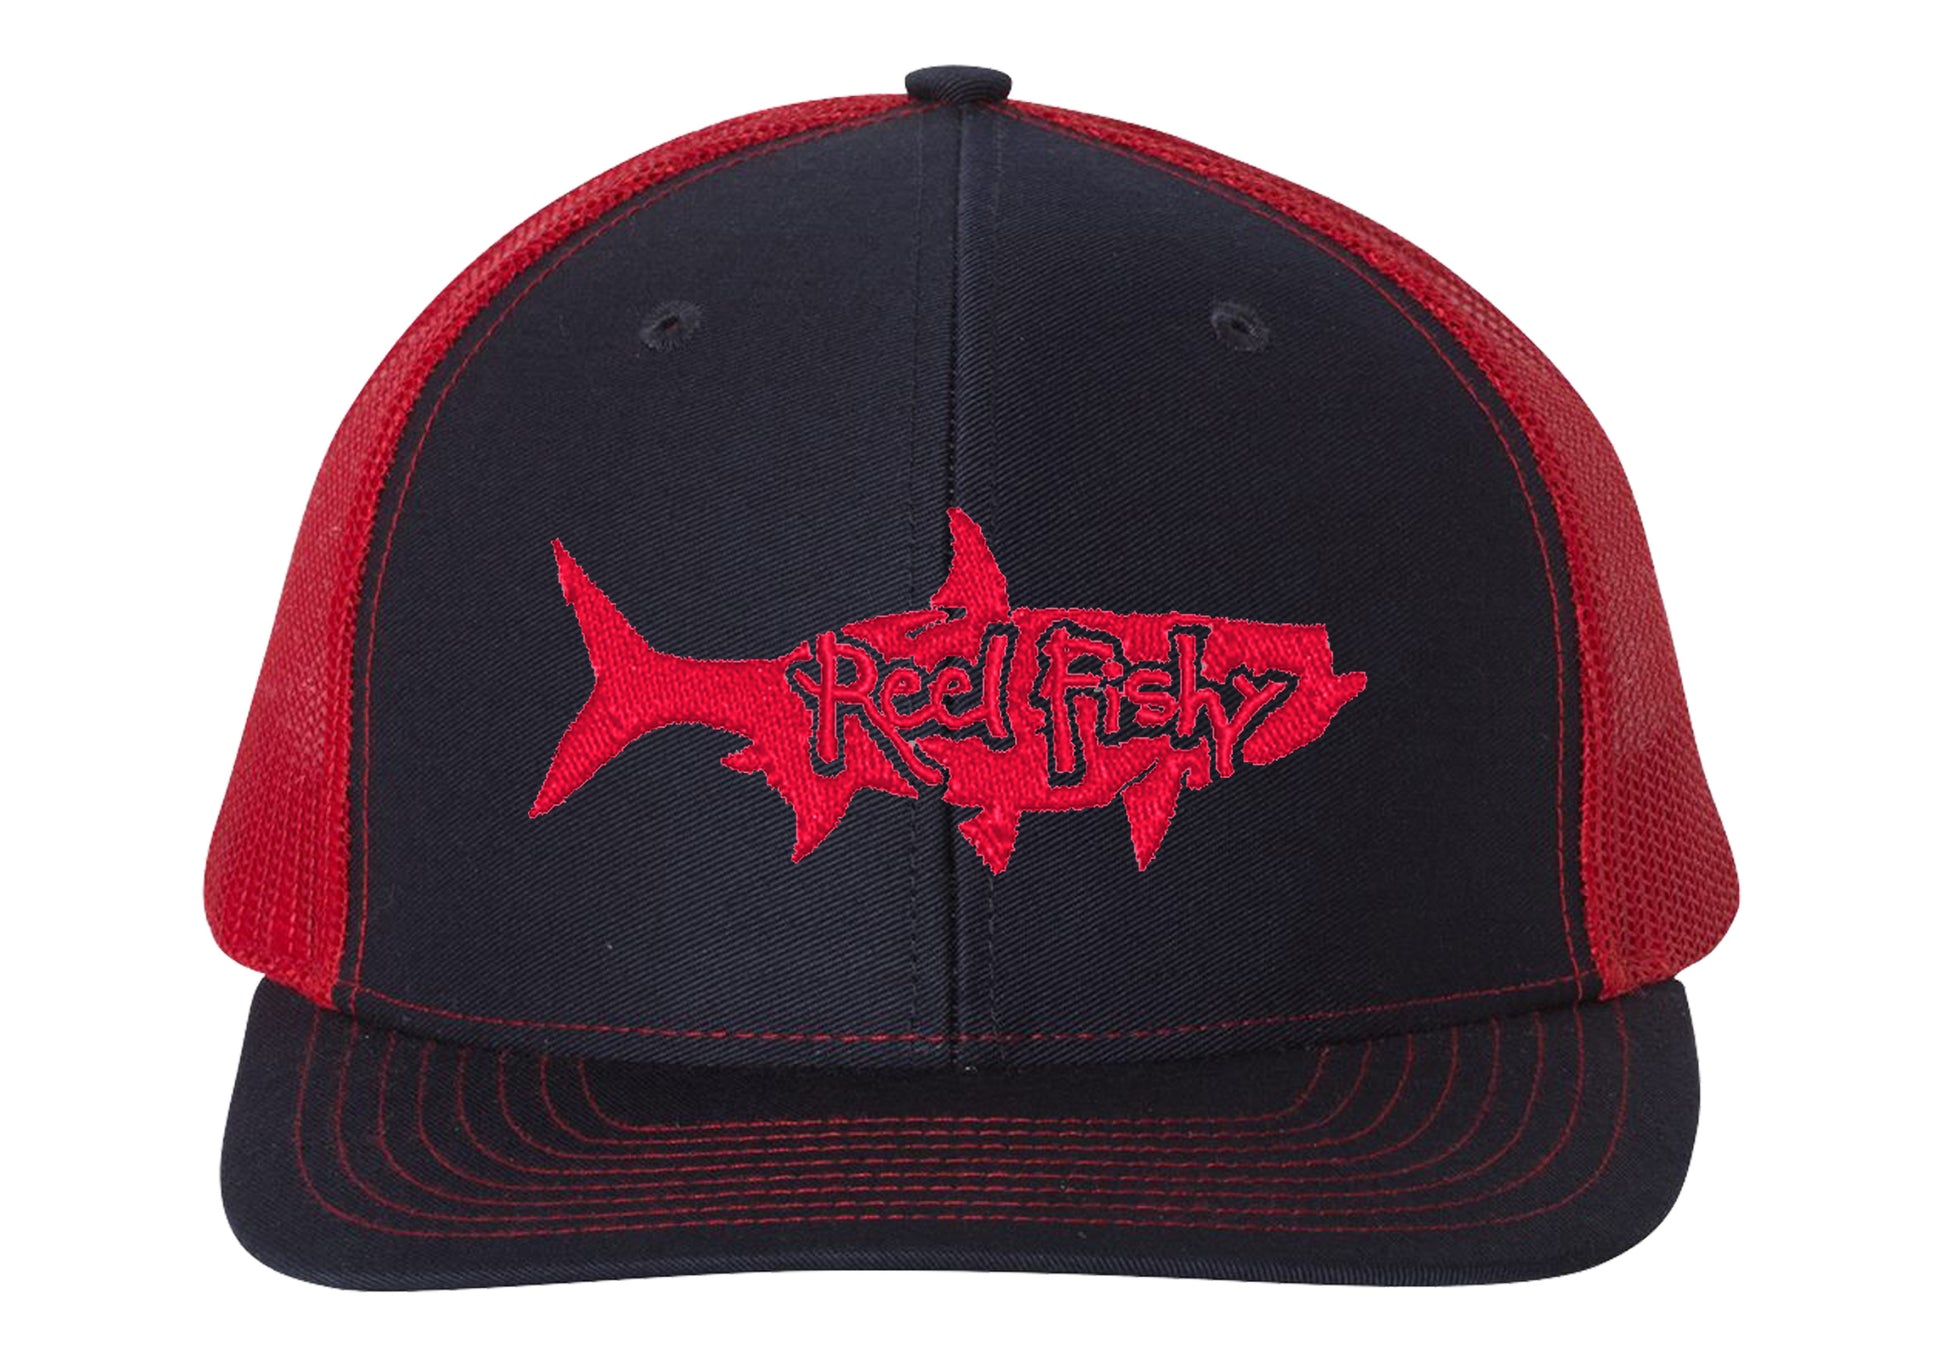 Navy/Red Trucker hat with Red Tarpon Logo